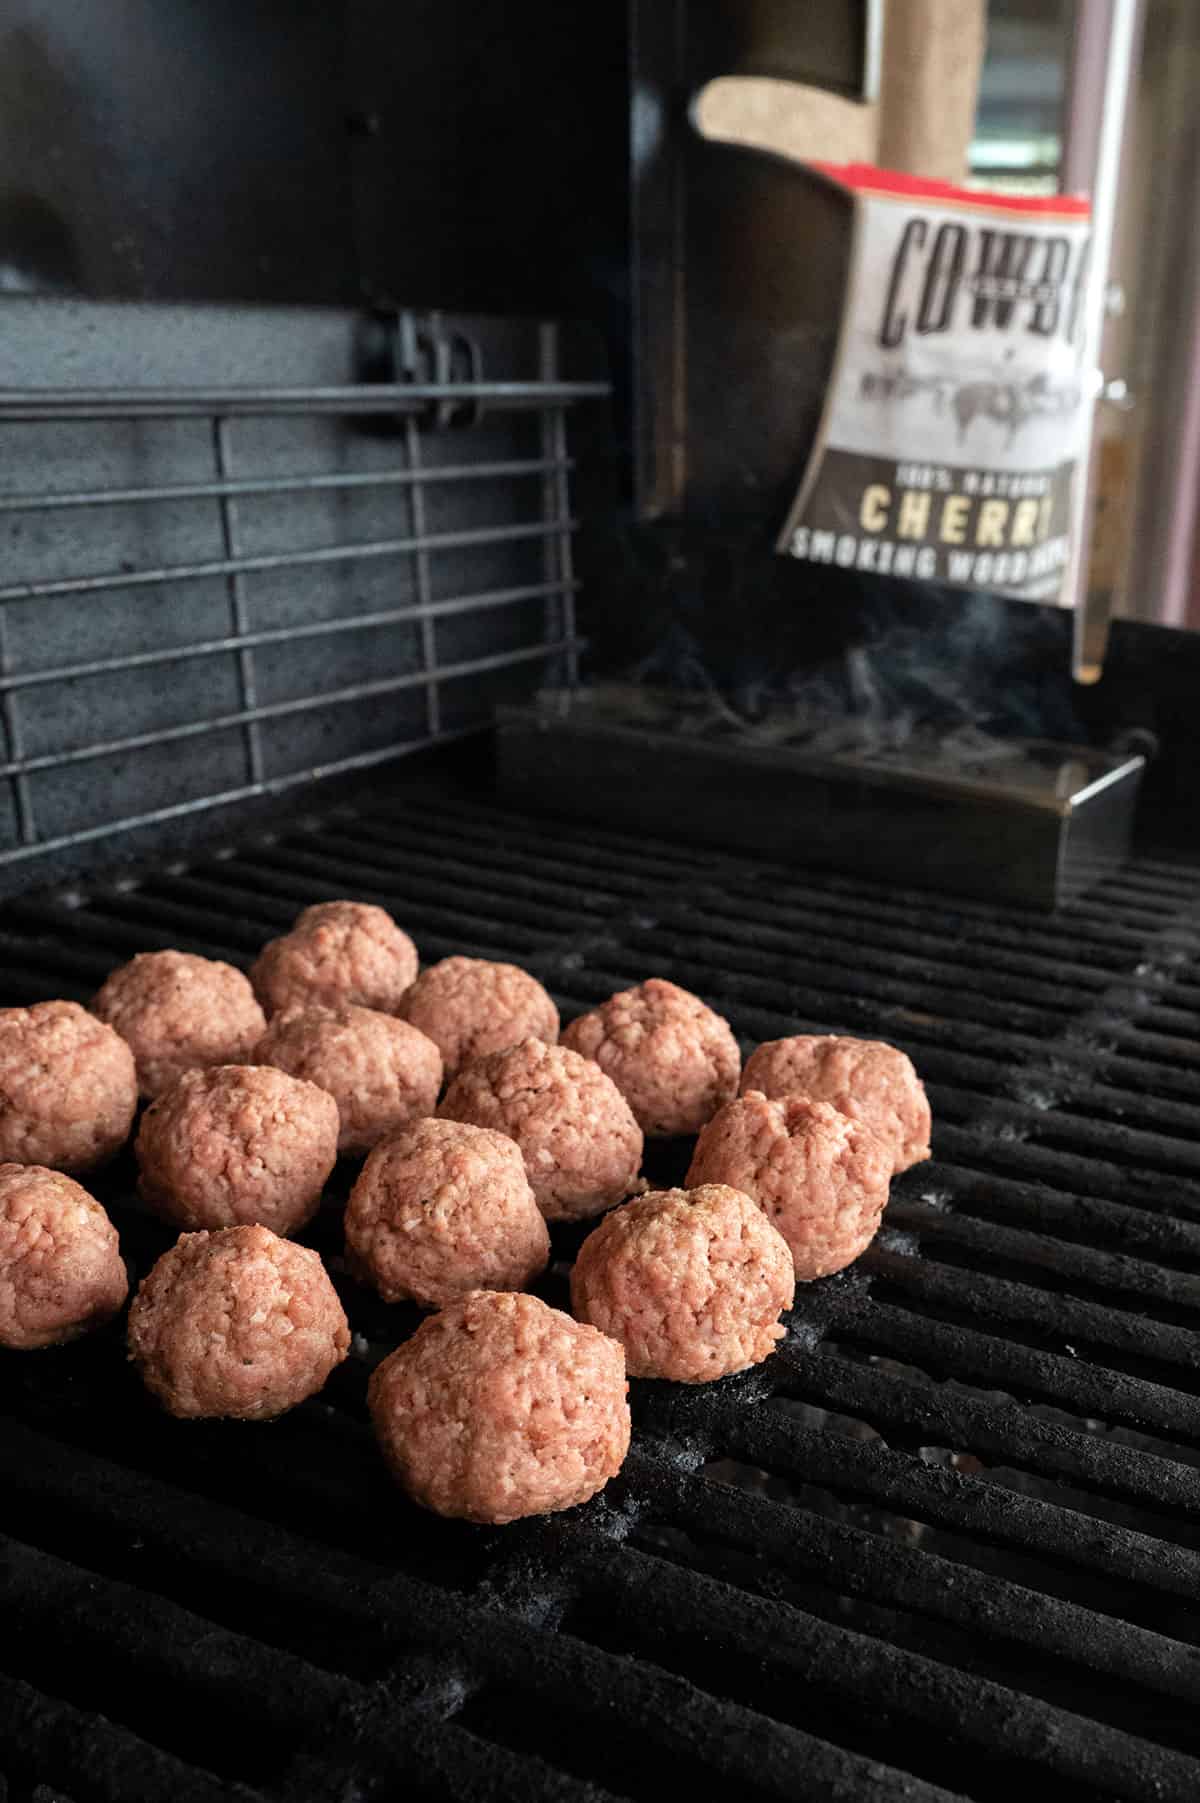 raw meatballs on grill by smoke box.